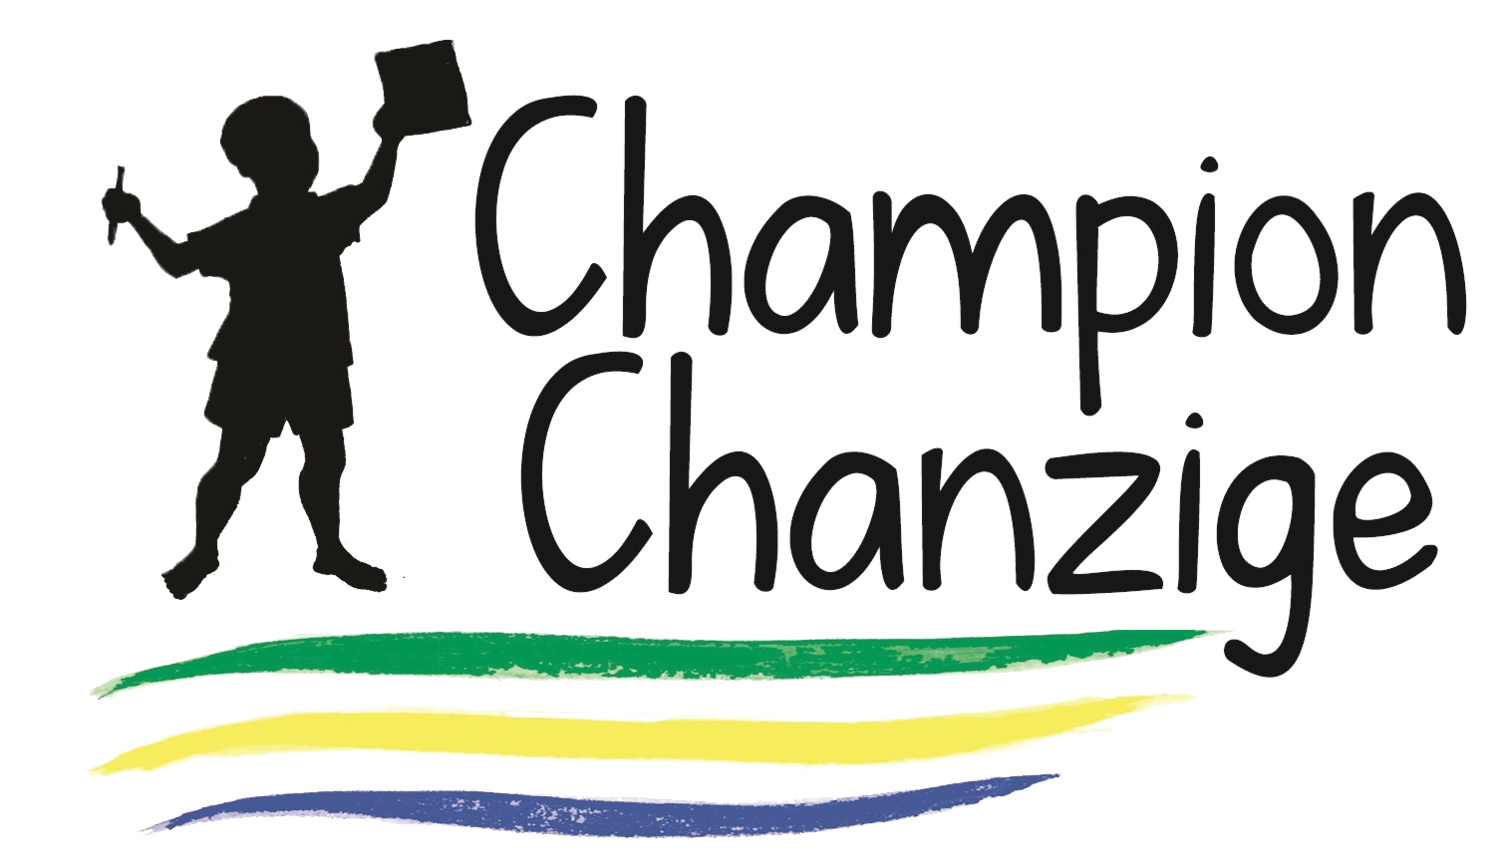 Contact 3 — Champion Chanzige